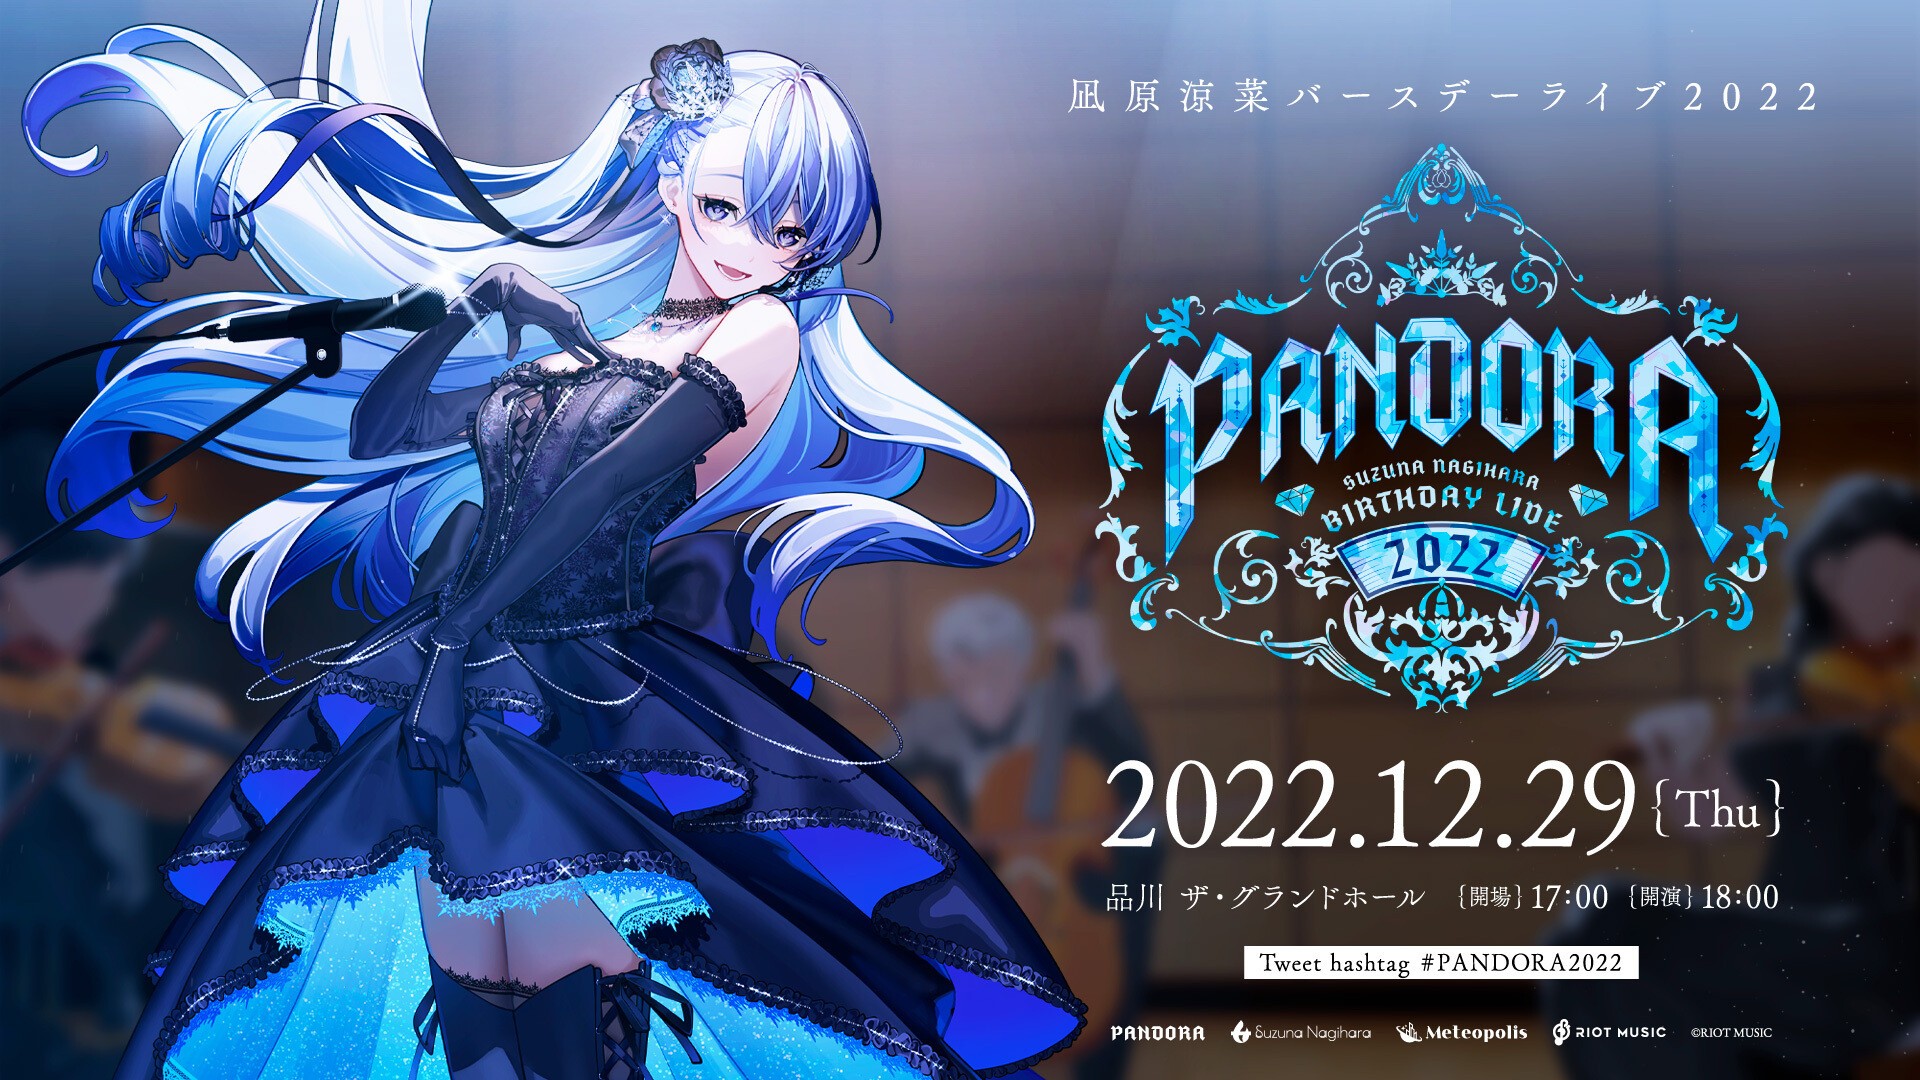 凪原涼菜 BIRTHDAY LIVE 2022 PANDORA | RIOT MUSIC LIVE Tickets